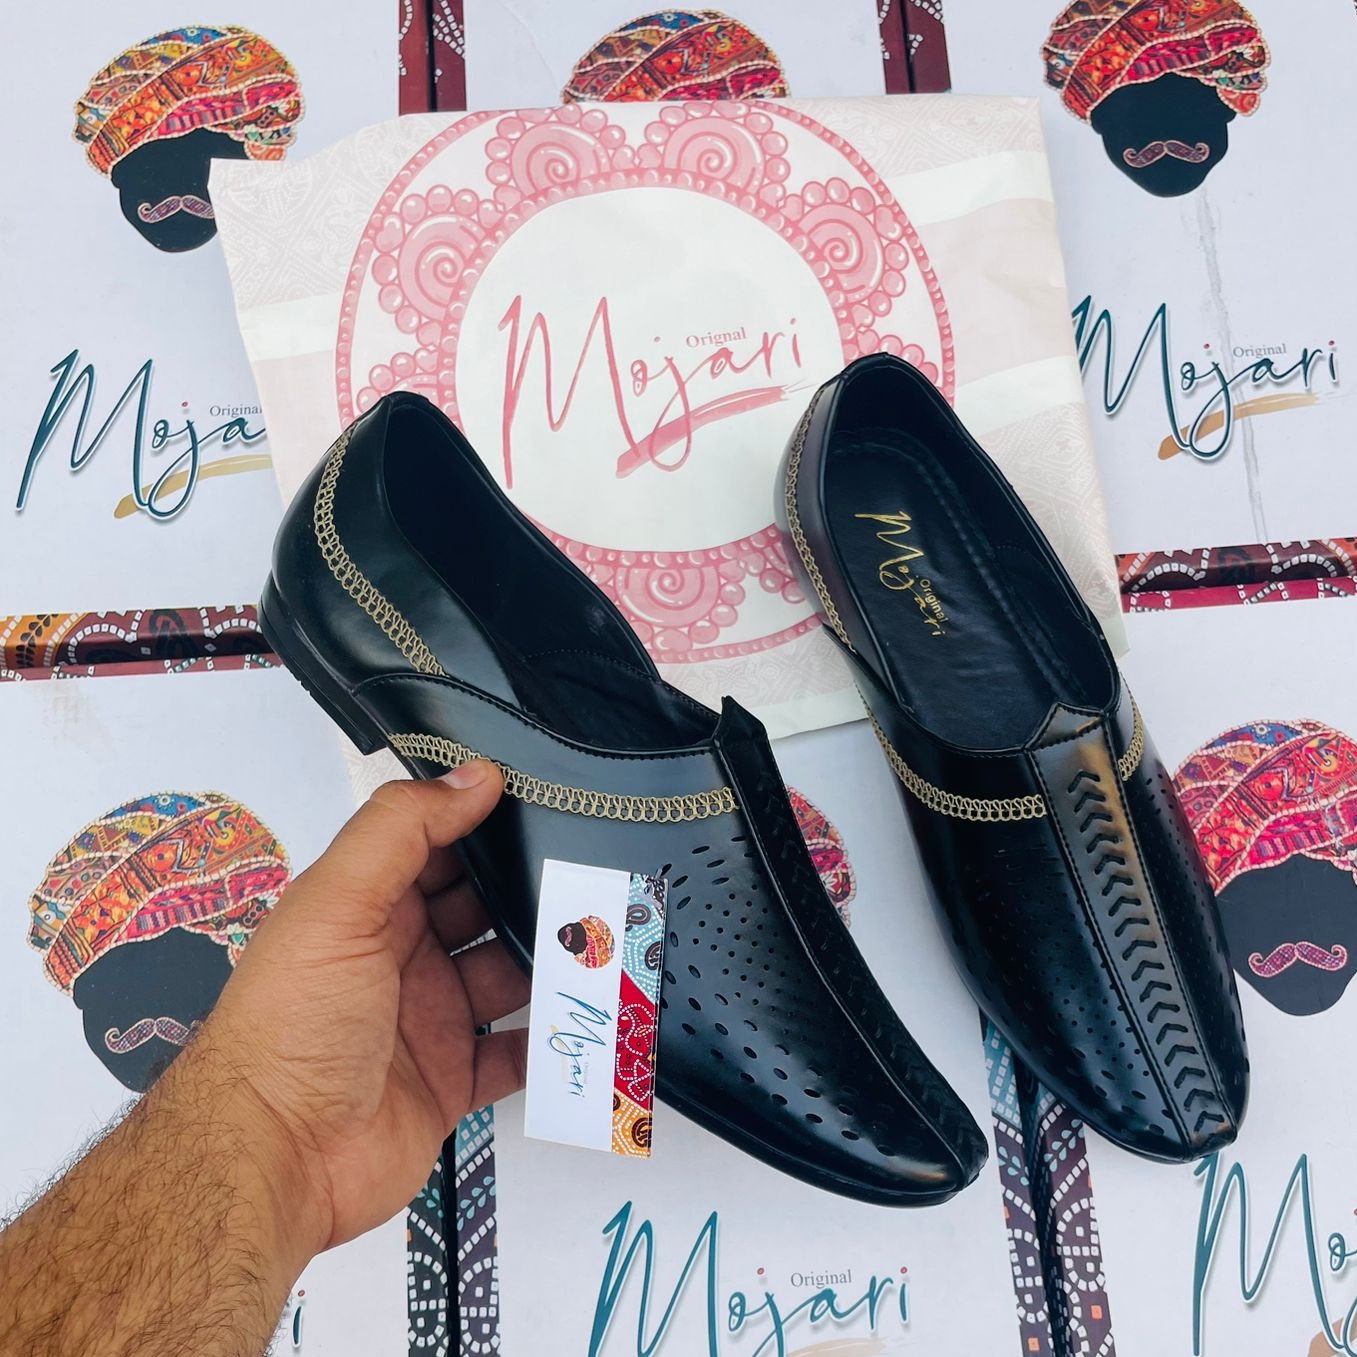 New Men's Fashion Mojari Peshawari Jutties - JACKMARC.COM